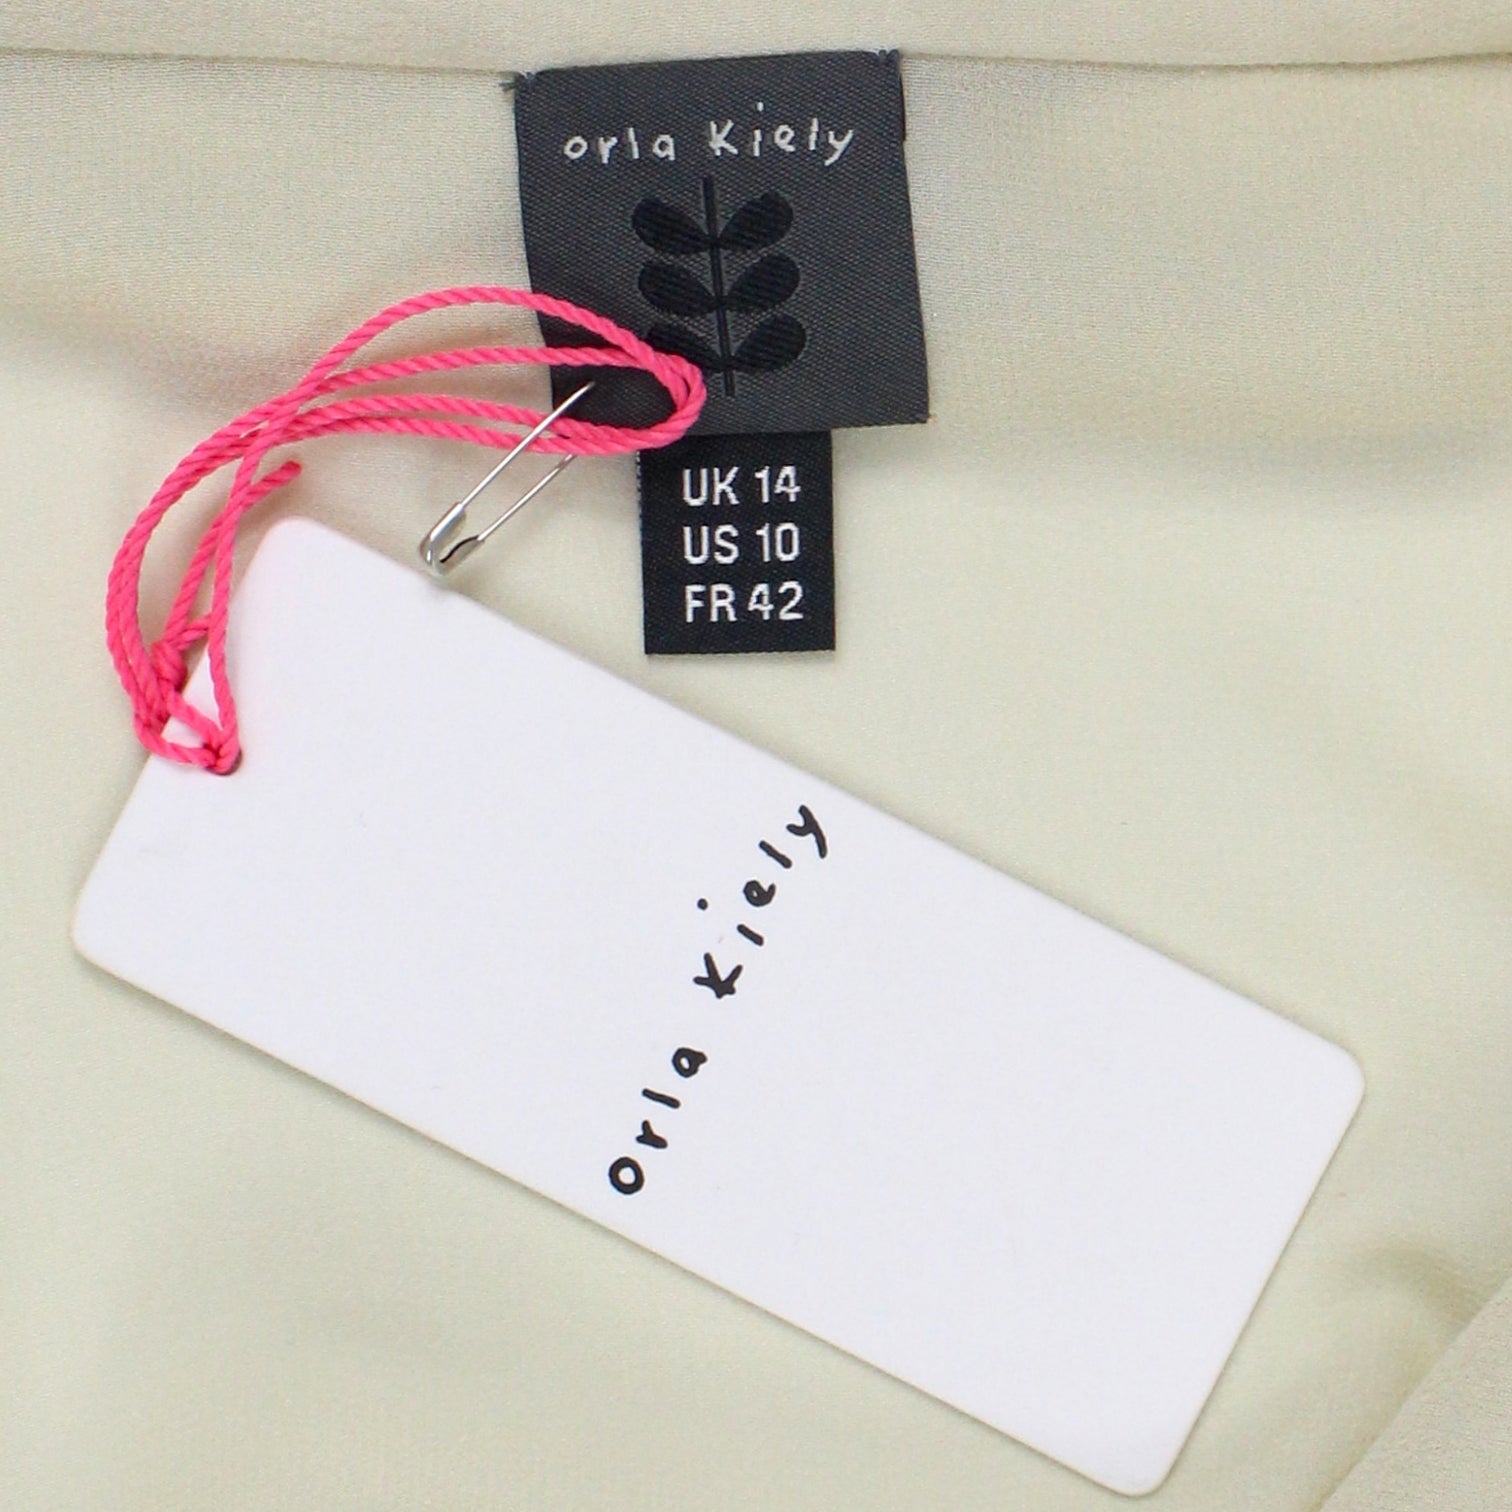 Orla Kiely Cream Silk Georgette Dress